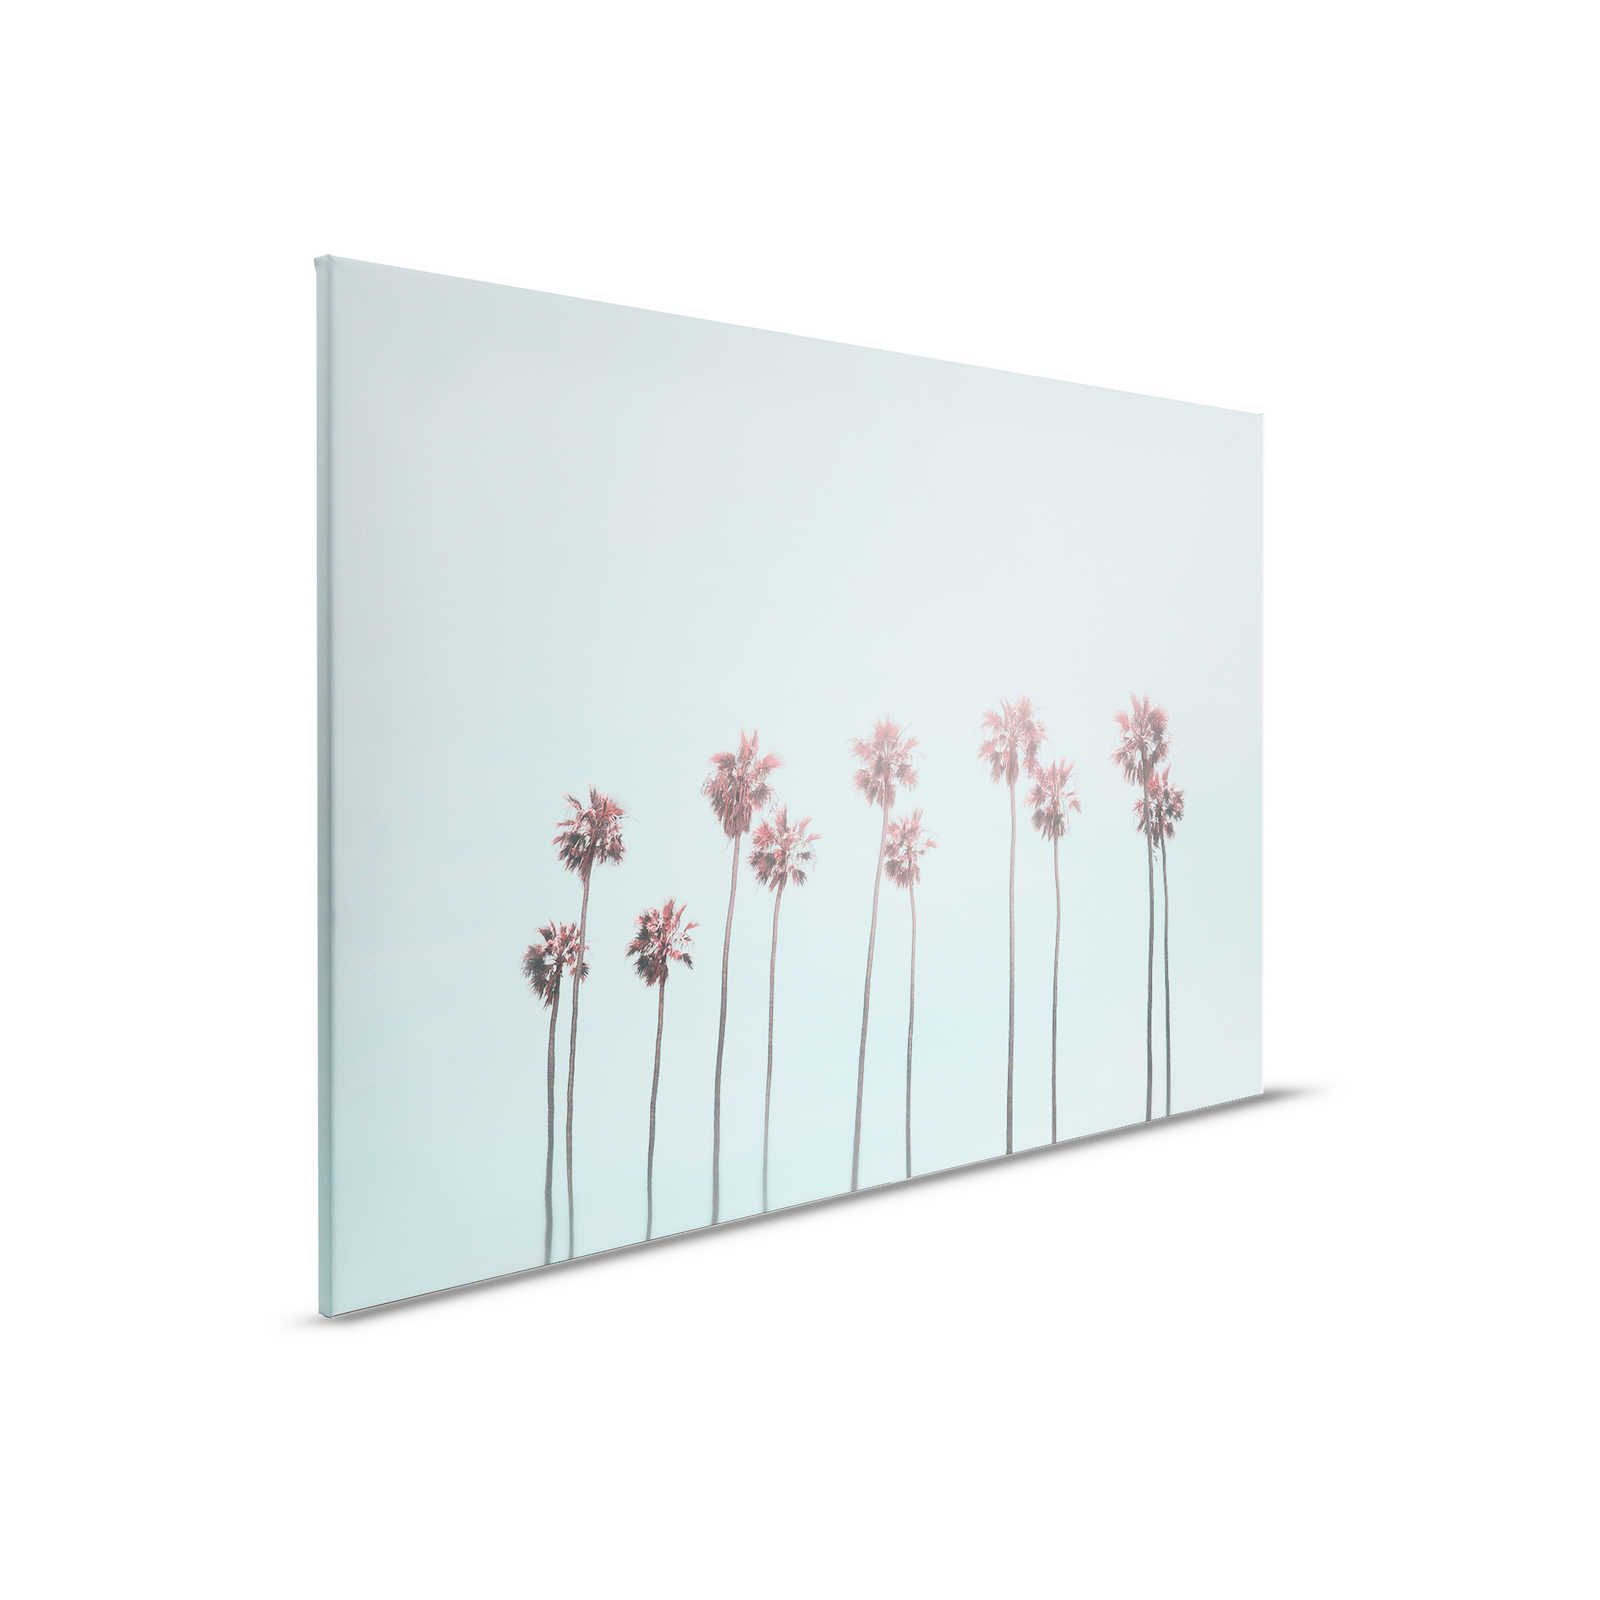         Leinwandbild Palmen & Himmel für Strandfeeling in Türkis & Pink – 0,90 m x 0,60 m
    